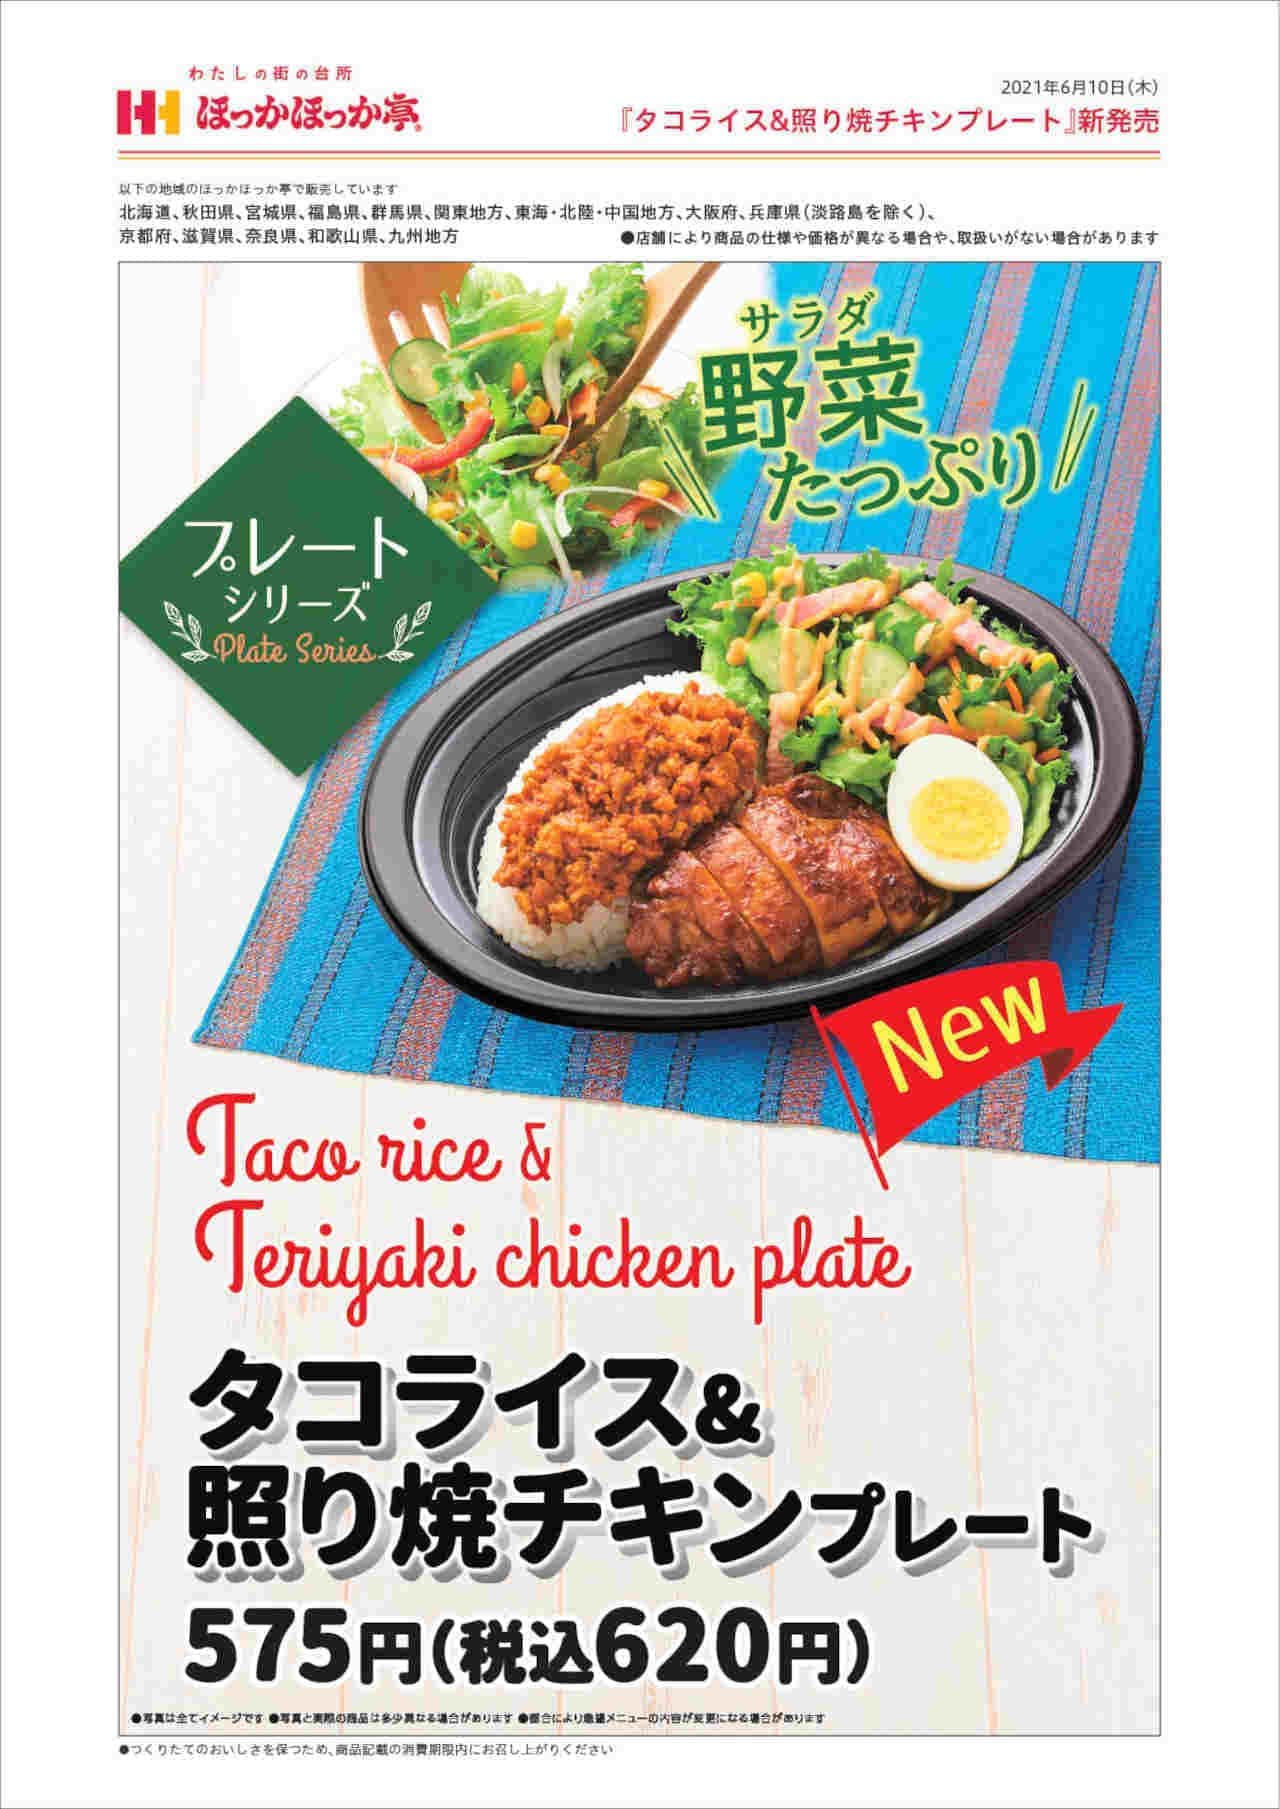 Hokka Hokka Tei "Taco Rice & Teruyaki Chicken Plate"